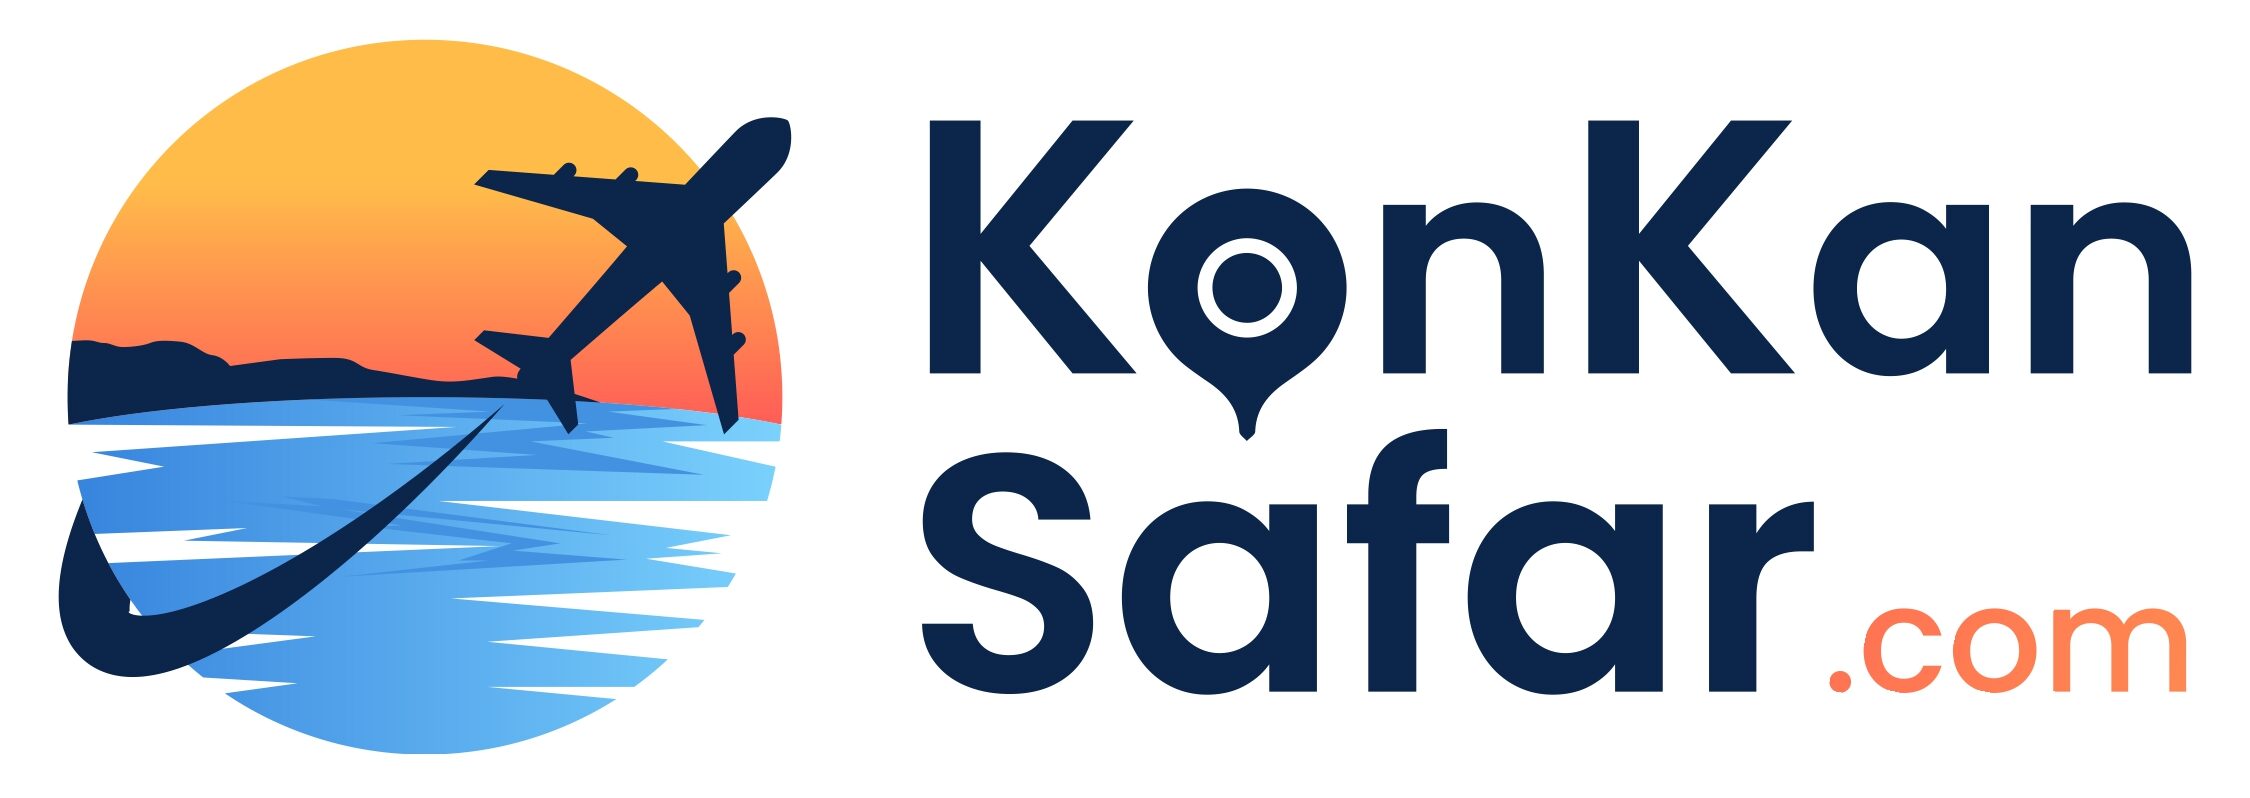 Introducing Konkan Guide Logo! - YouTube